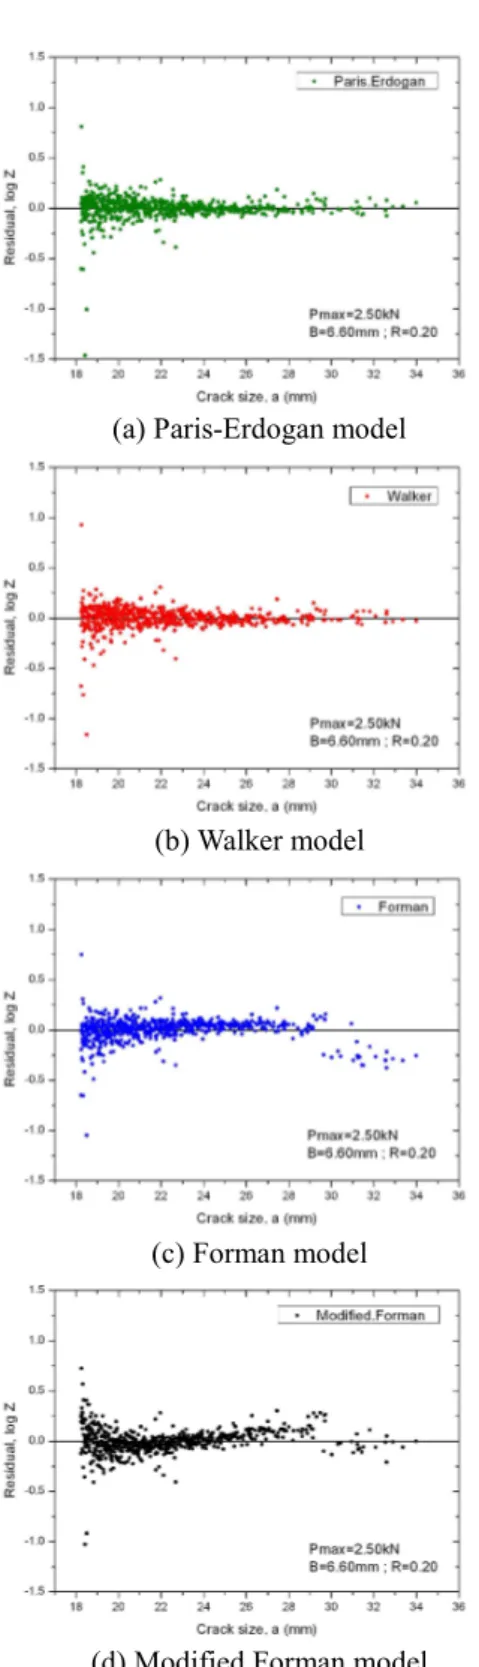 Fig. 5 Residual logZ estimated by condition of maximum  load 2.50kN  서도  ‘확률론적  Paris-Erdogan  모델’과  ‘확률론적  Walker  모델’이  확률론적  피로균열전파모델로서  우수한  적합성을  보이는  것으로  사료된다